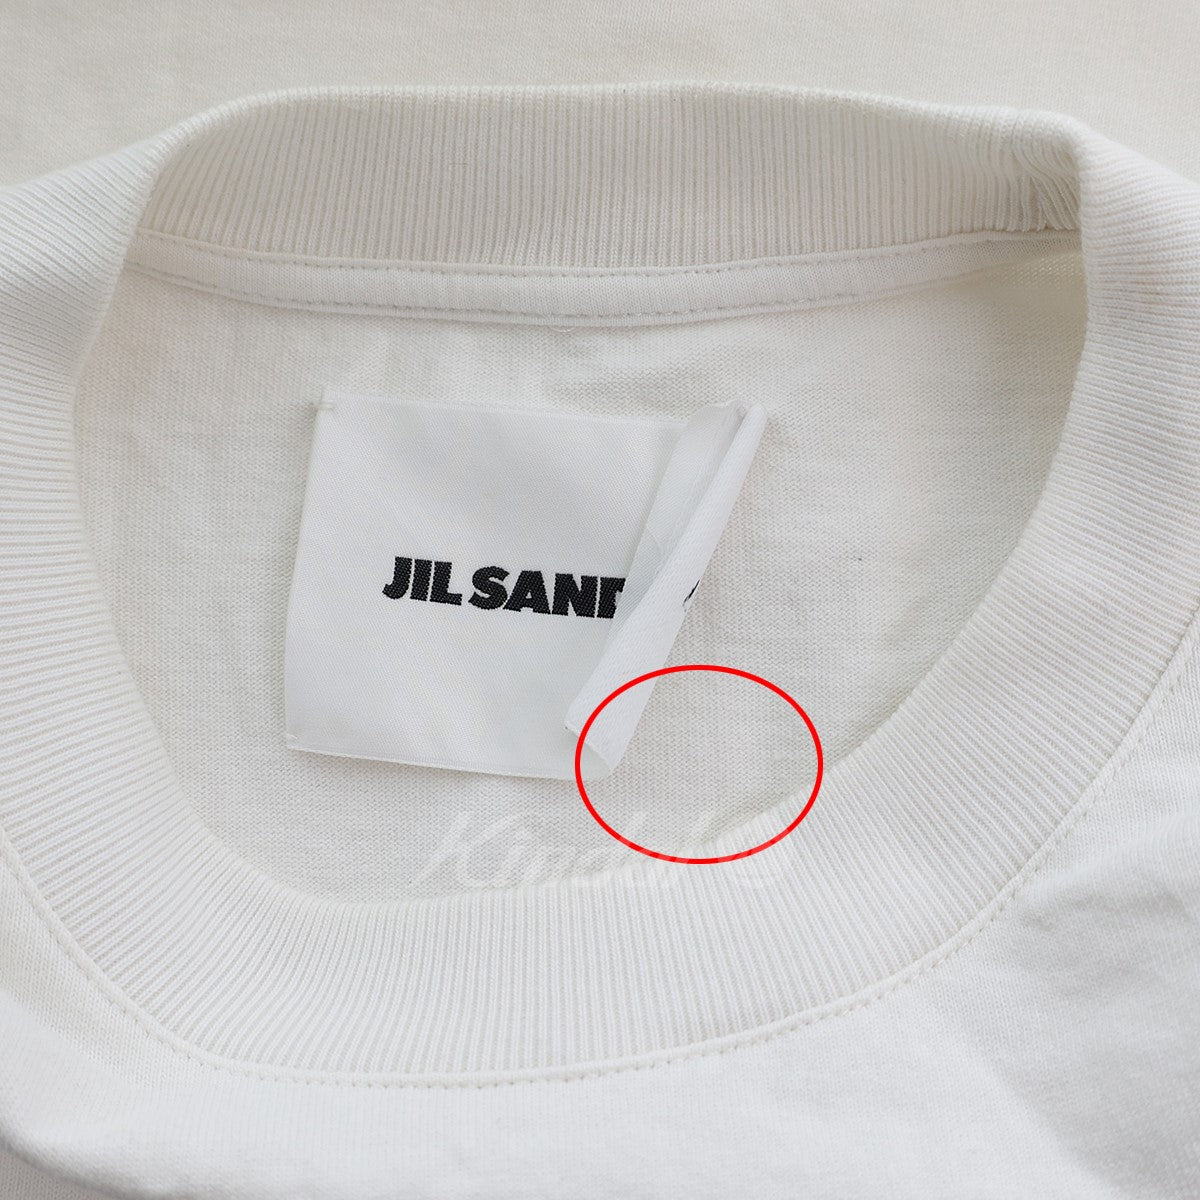 JIL SANDER(ジルサンダー) ロゴプリント半袖Tシャツ JSMS707045 ...